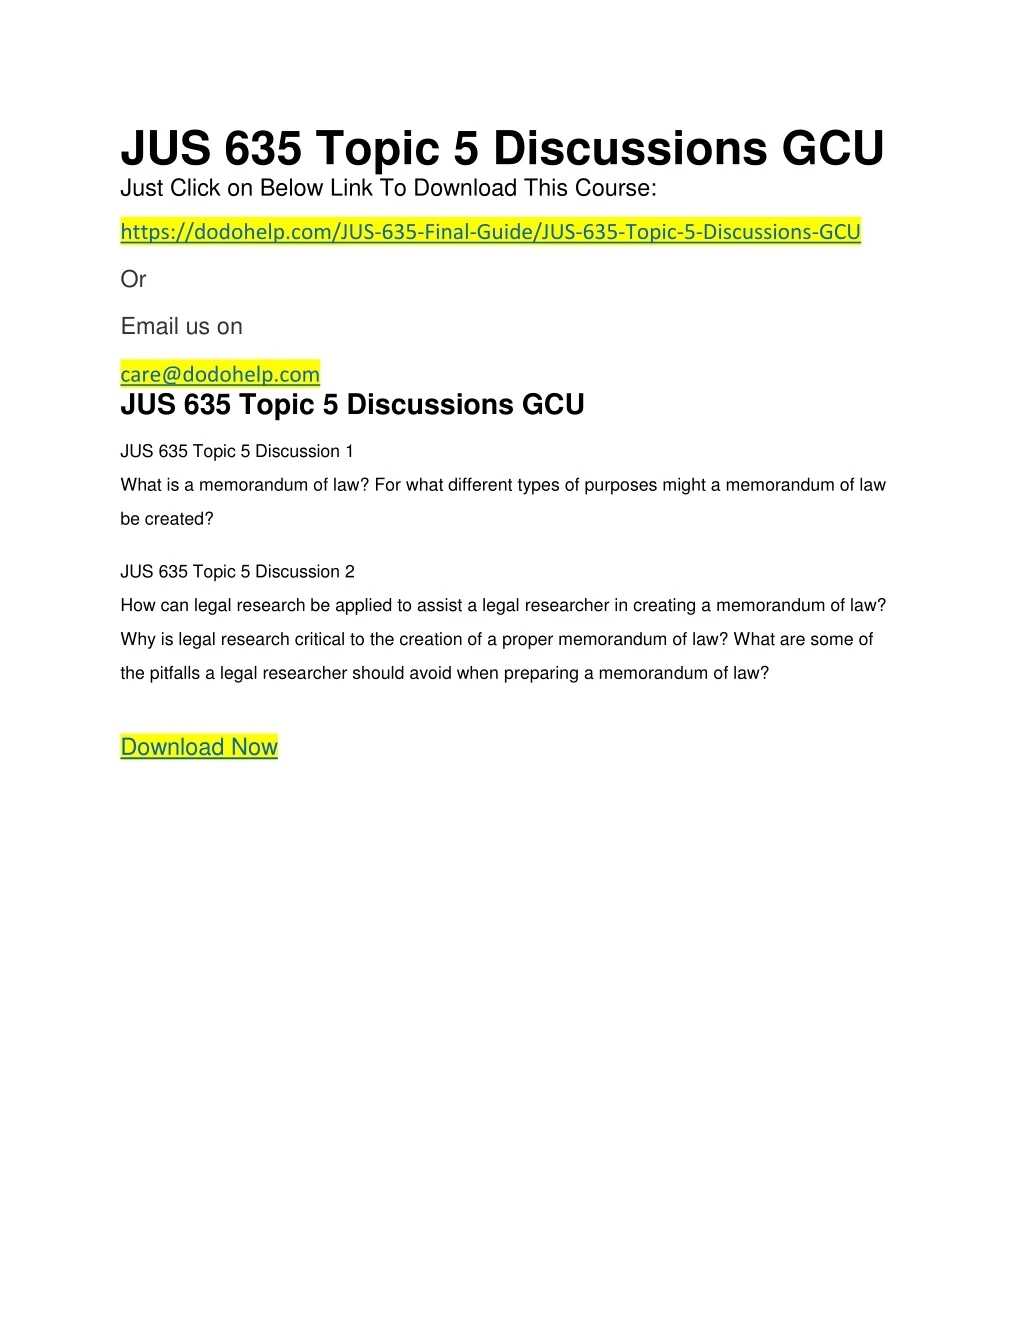 jus 635 topic 5 discussions gcu just click